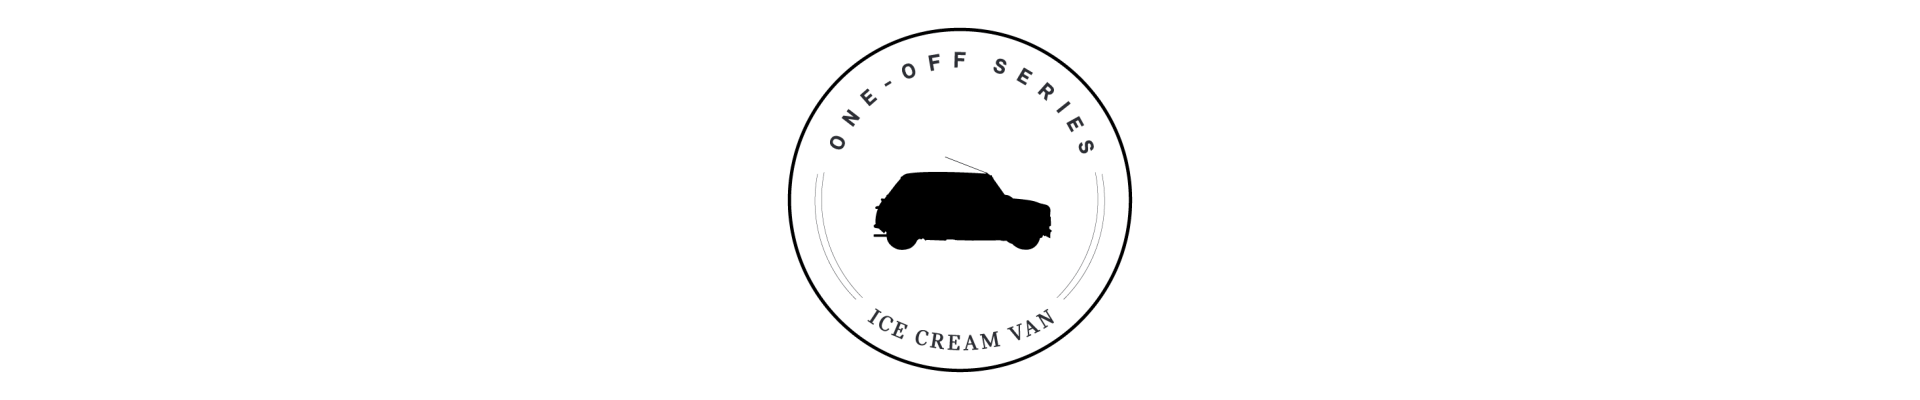 mini-ice-cream-van